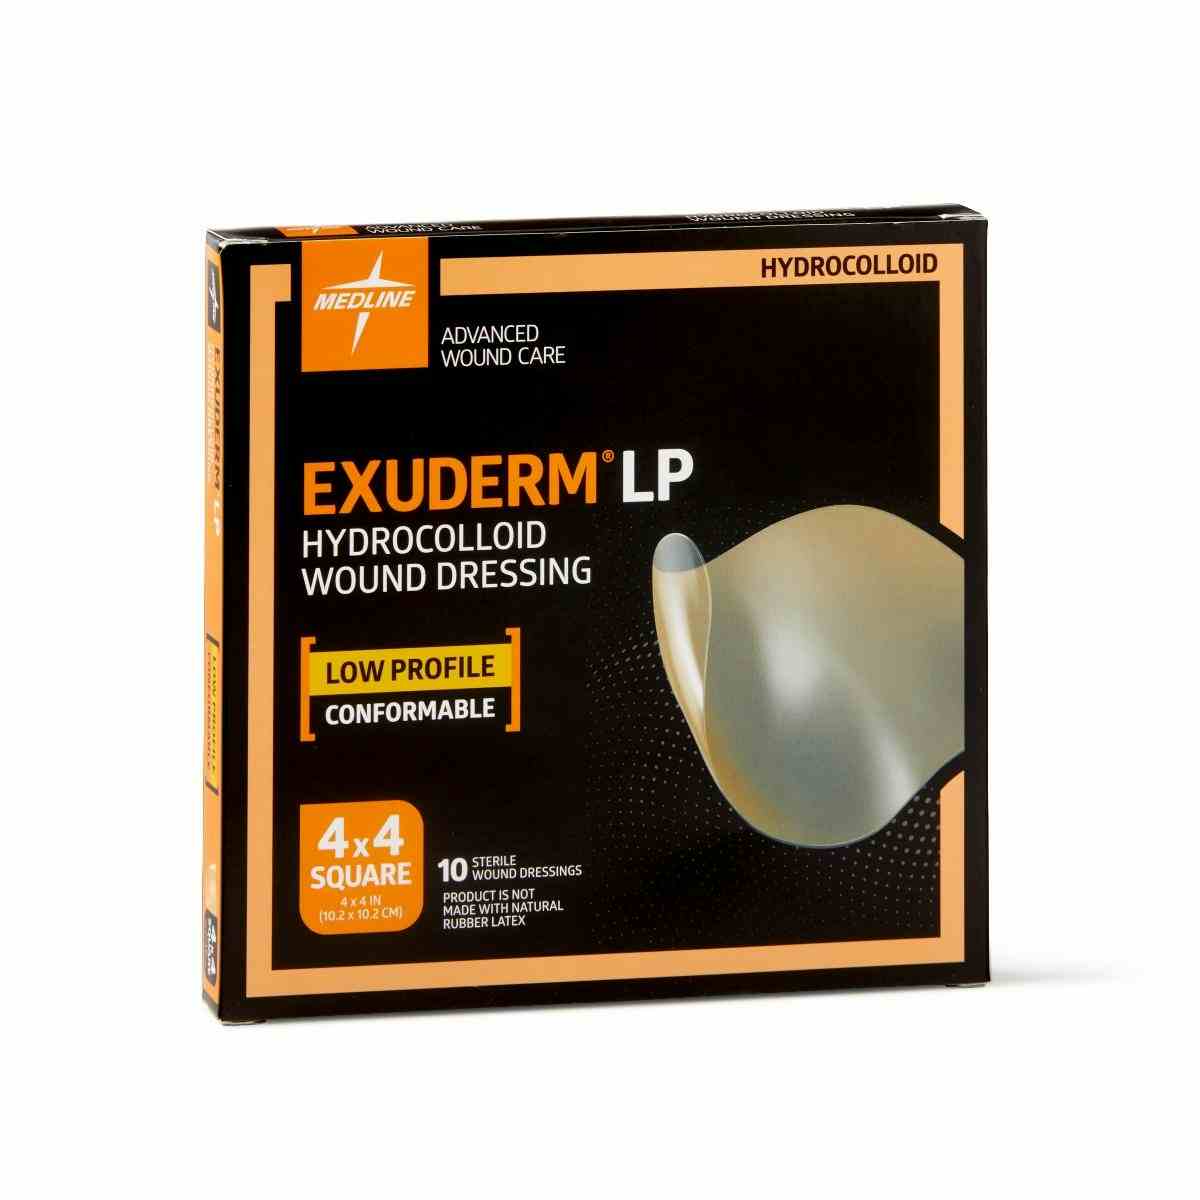 Exuderm LP Hydrocolloid Wound Dressing, MSC5100, 4" X 4" - Box of 10 